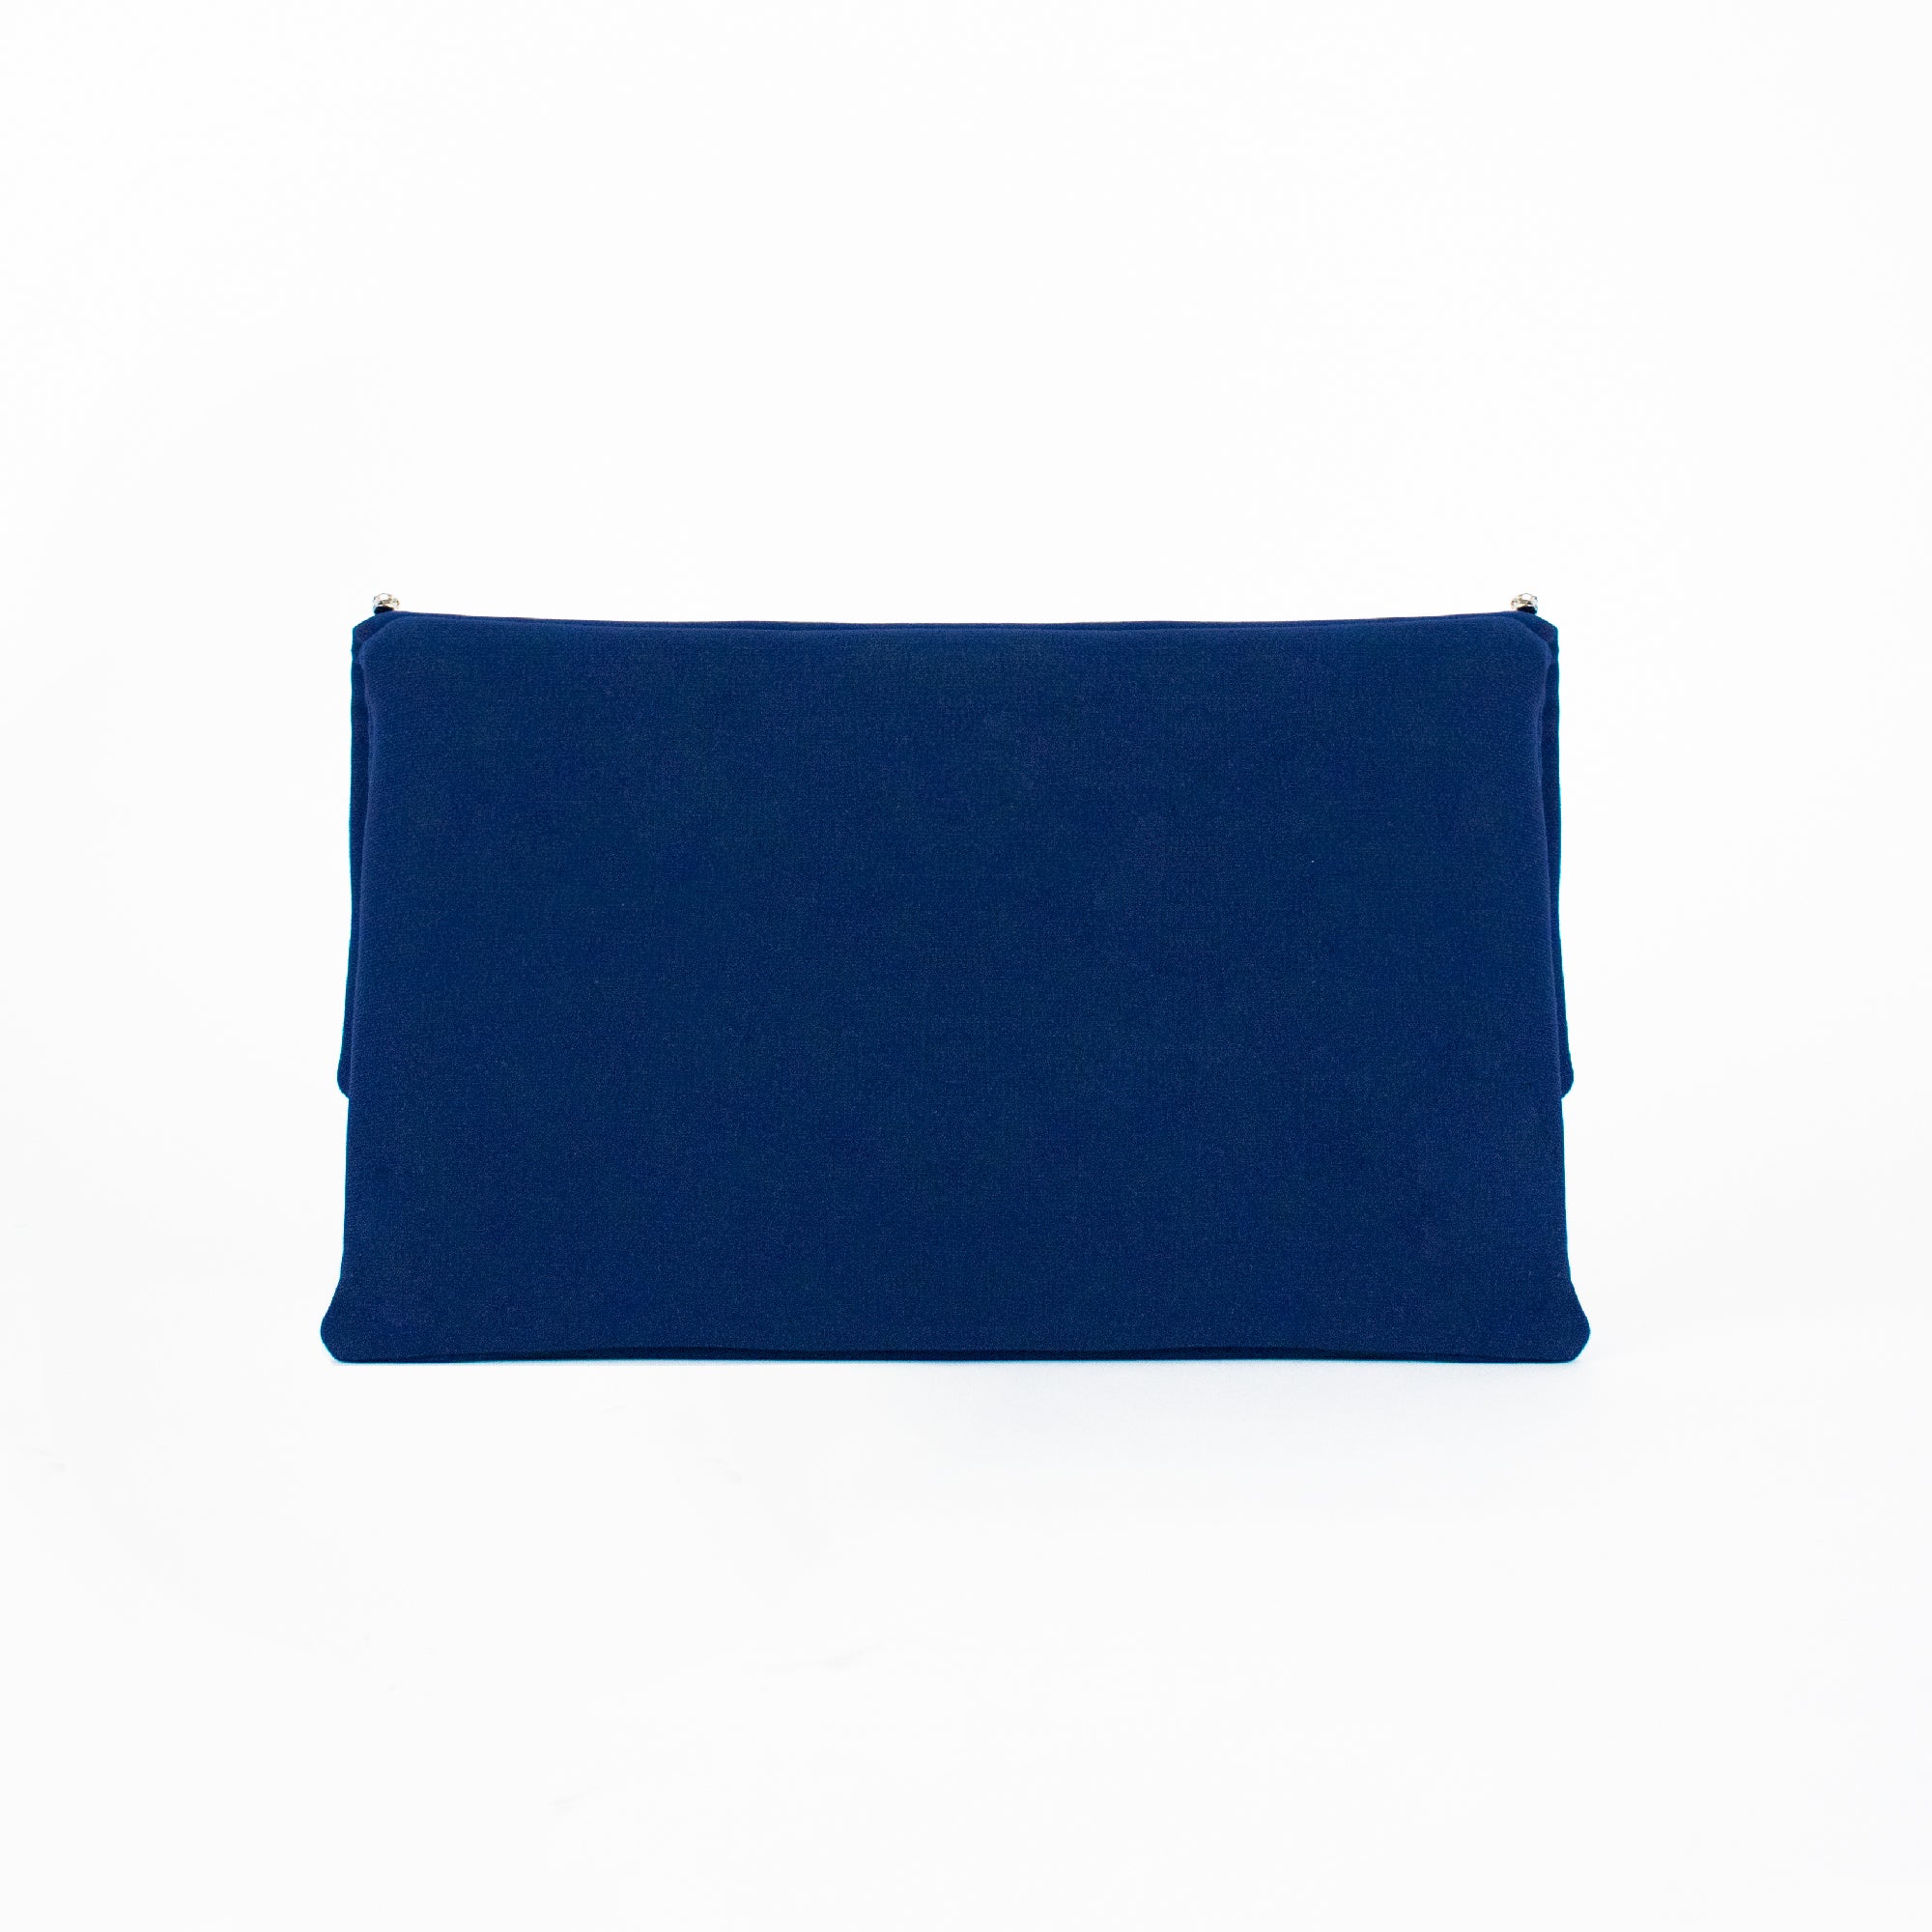 Blue clutch bag with Svarovski